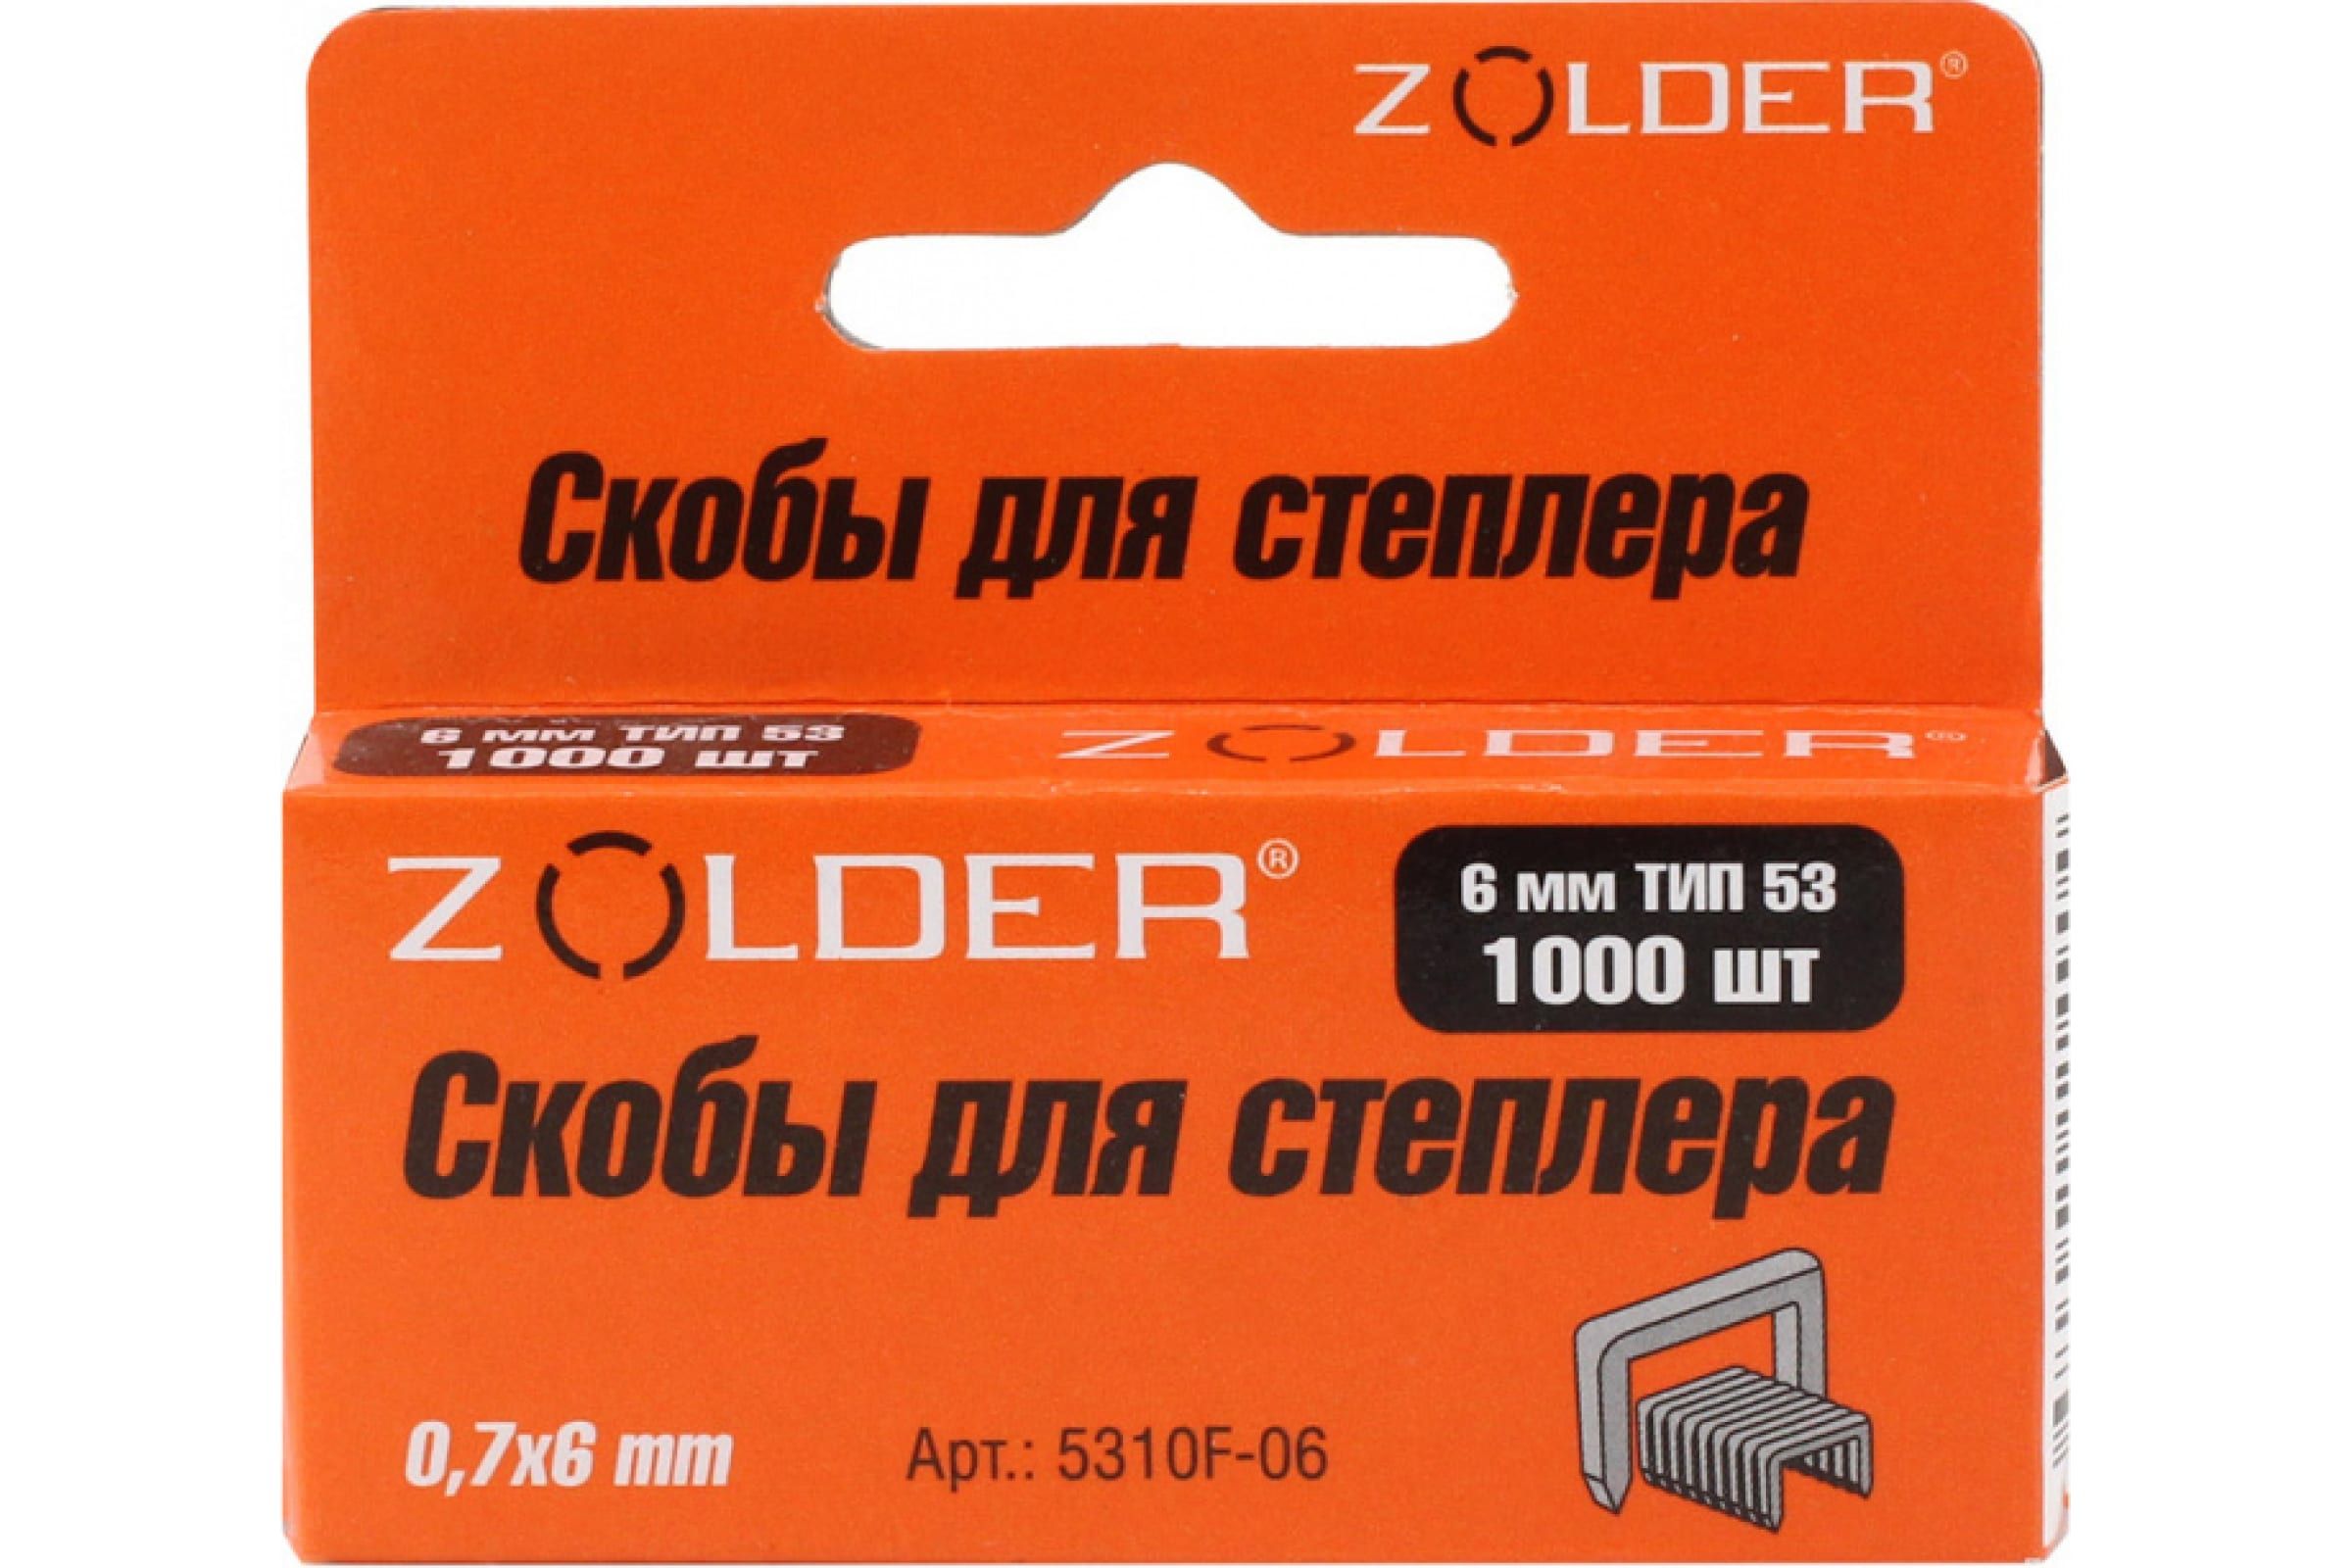 ZOLDER Запасные скобы 6 мм тип 53 /1000шт/ 5310F-006